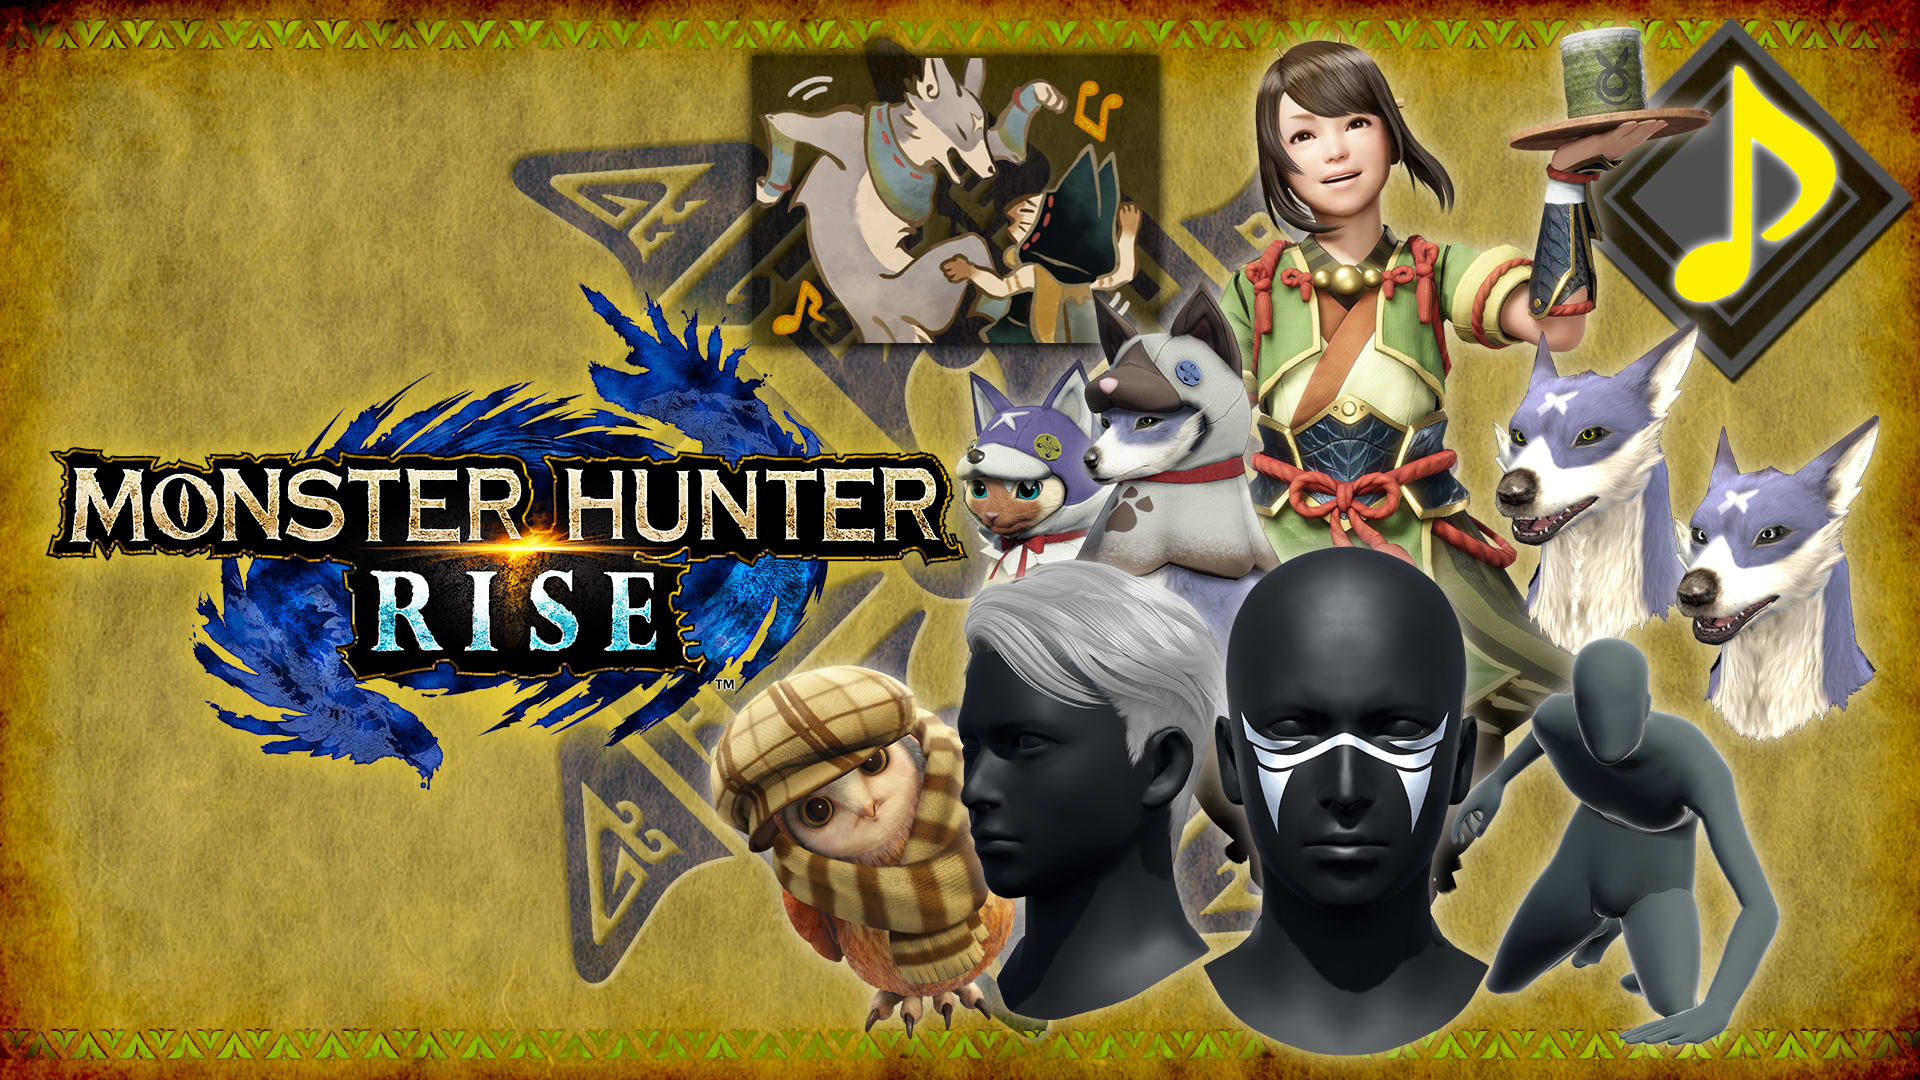 Pack 3 de DLC de Monster Hunter Rise